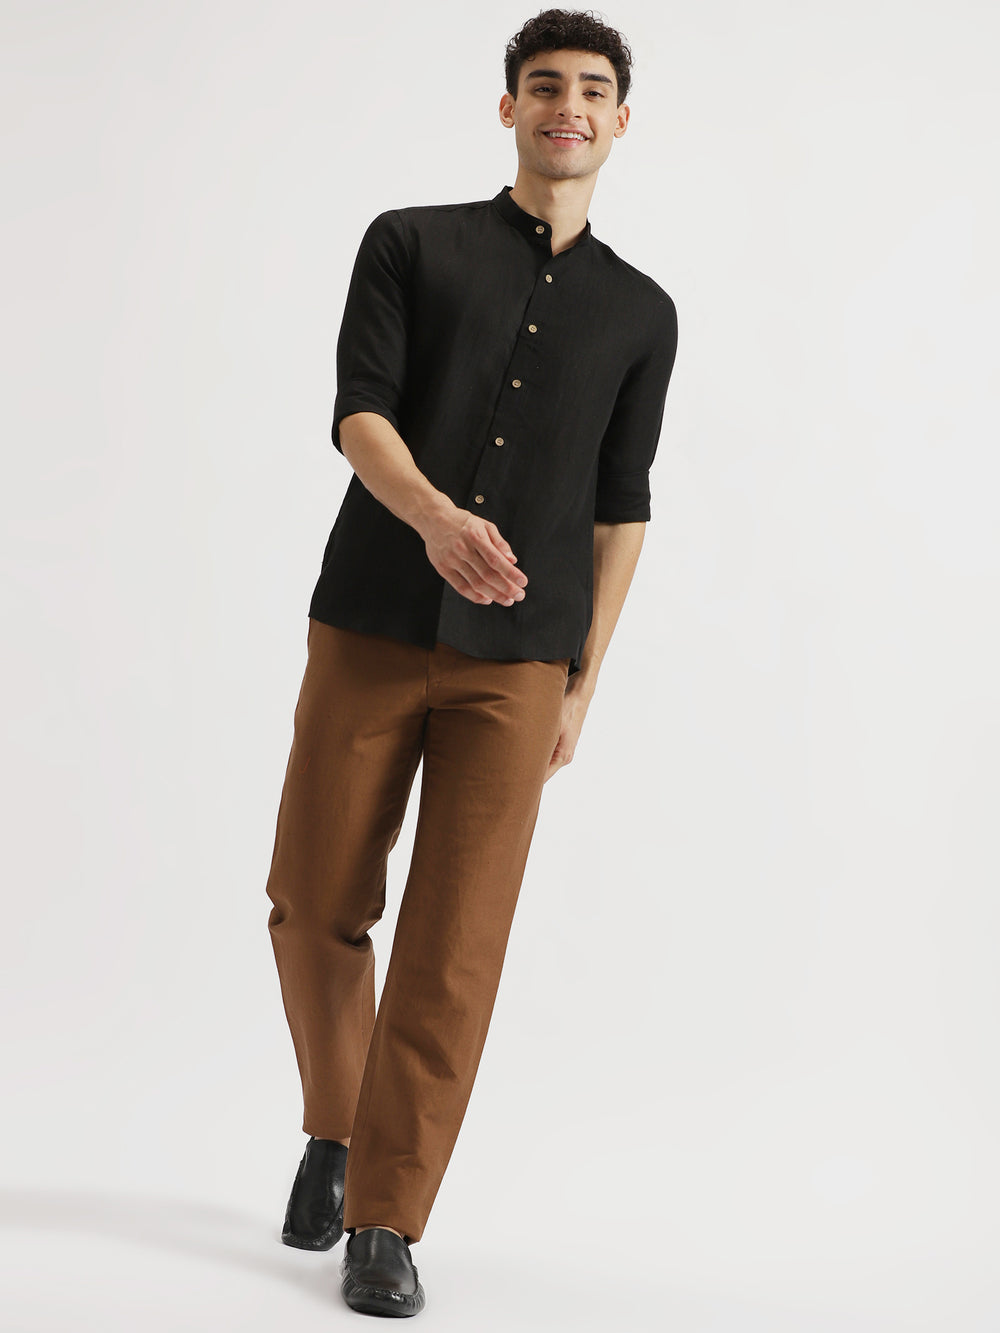 Ronan - Pure Linen Mandarin Collar Full Sleeve Shirt - Black